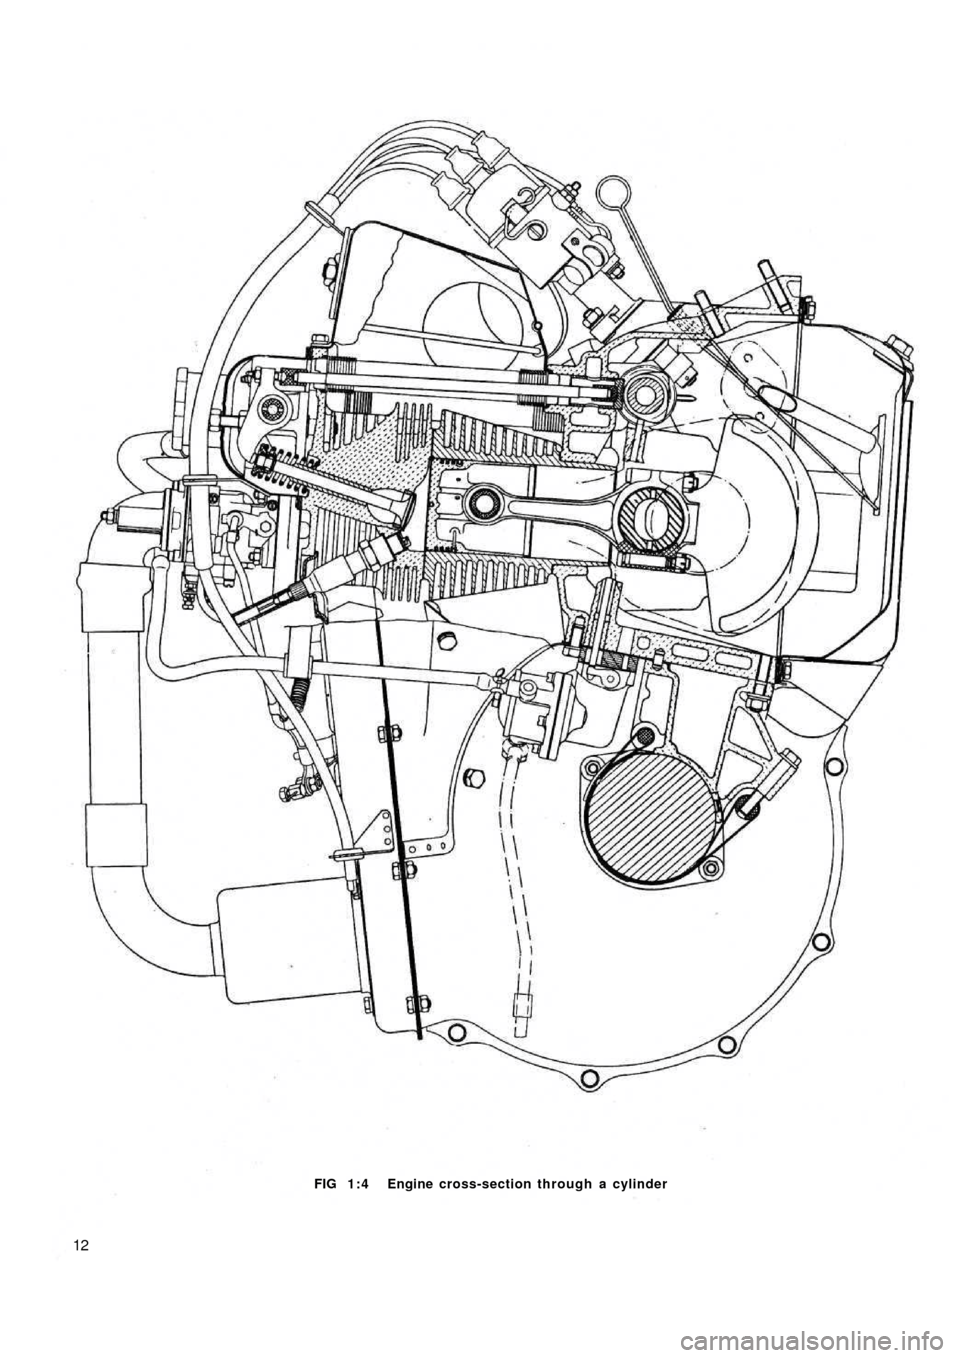 FIAT 500 1959 1.G Workshop Manual FIG 1 : 4  Engine cross-section through a cylinder
12 